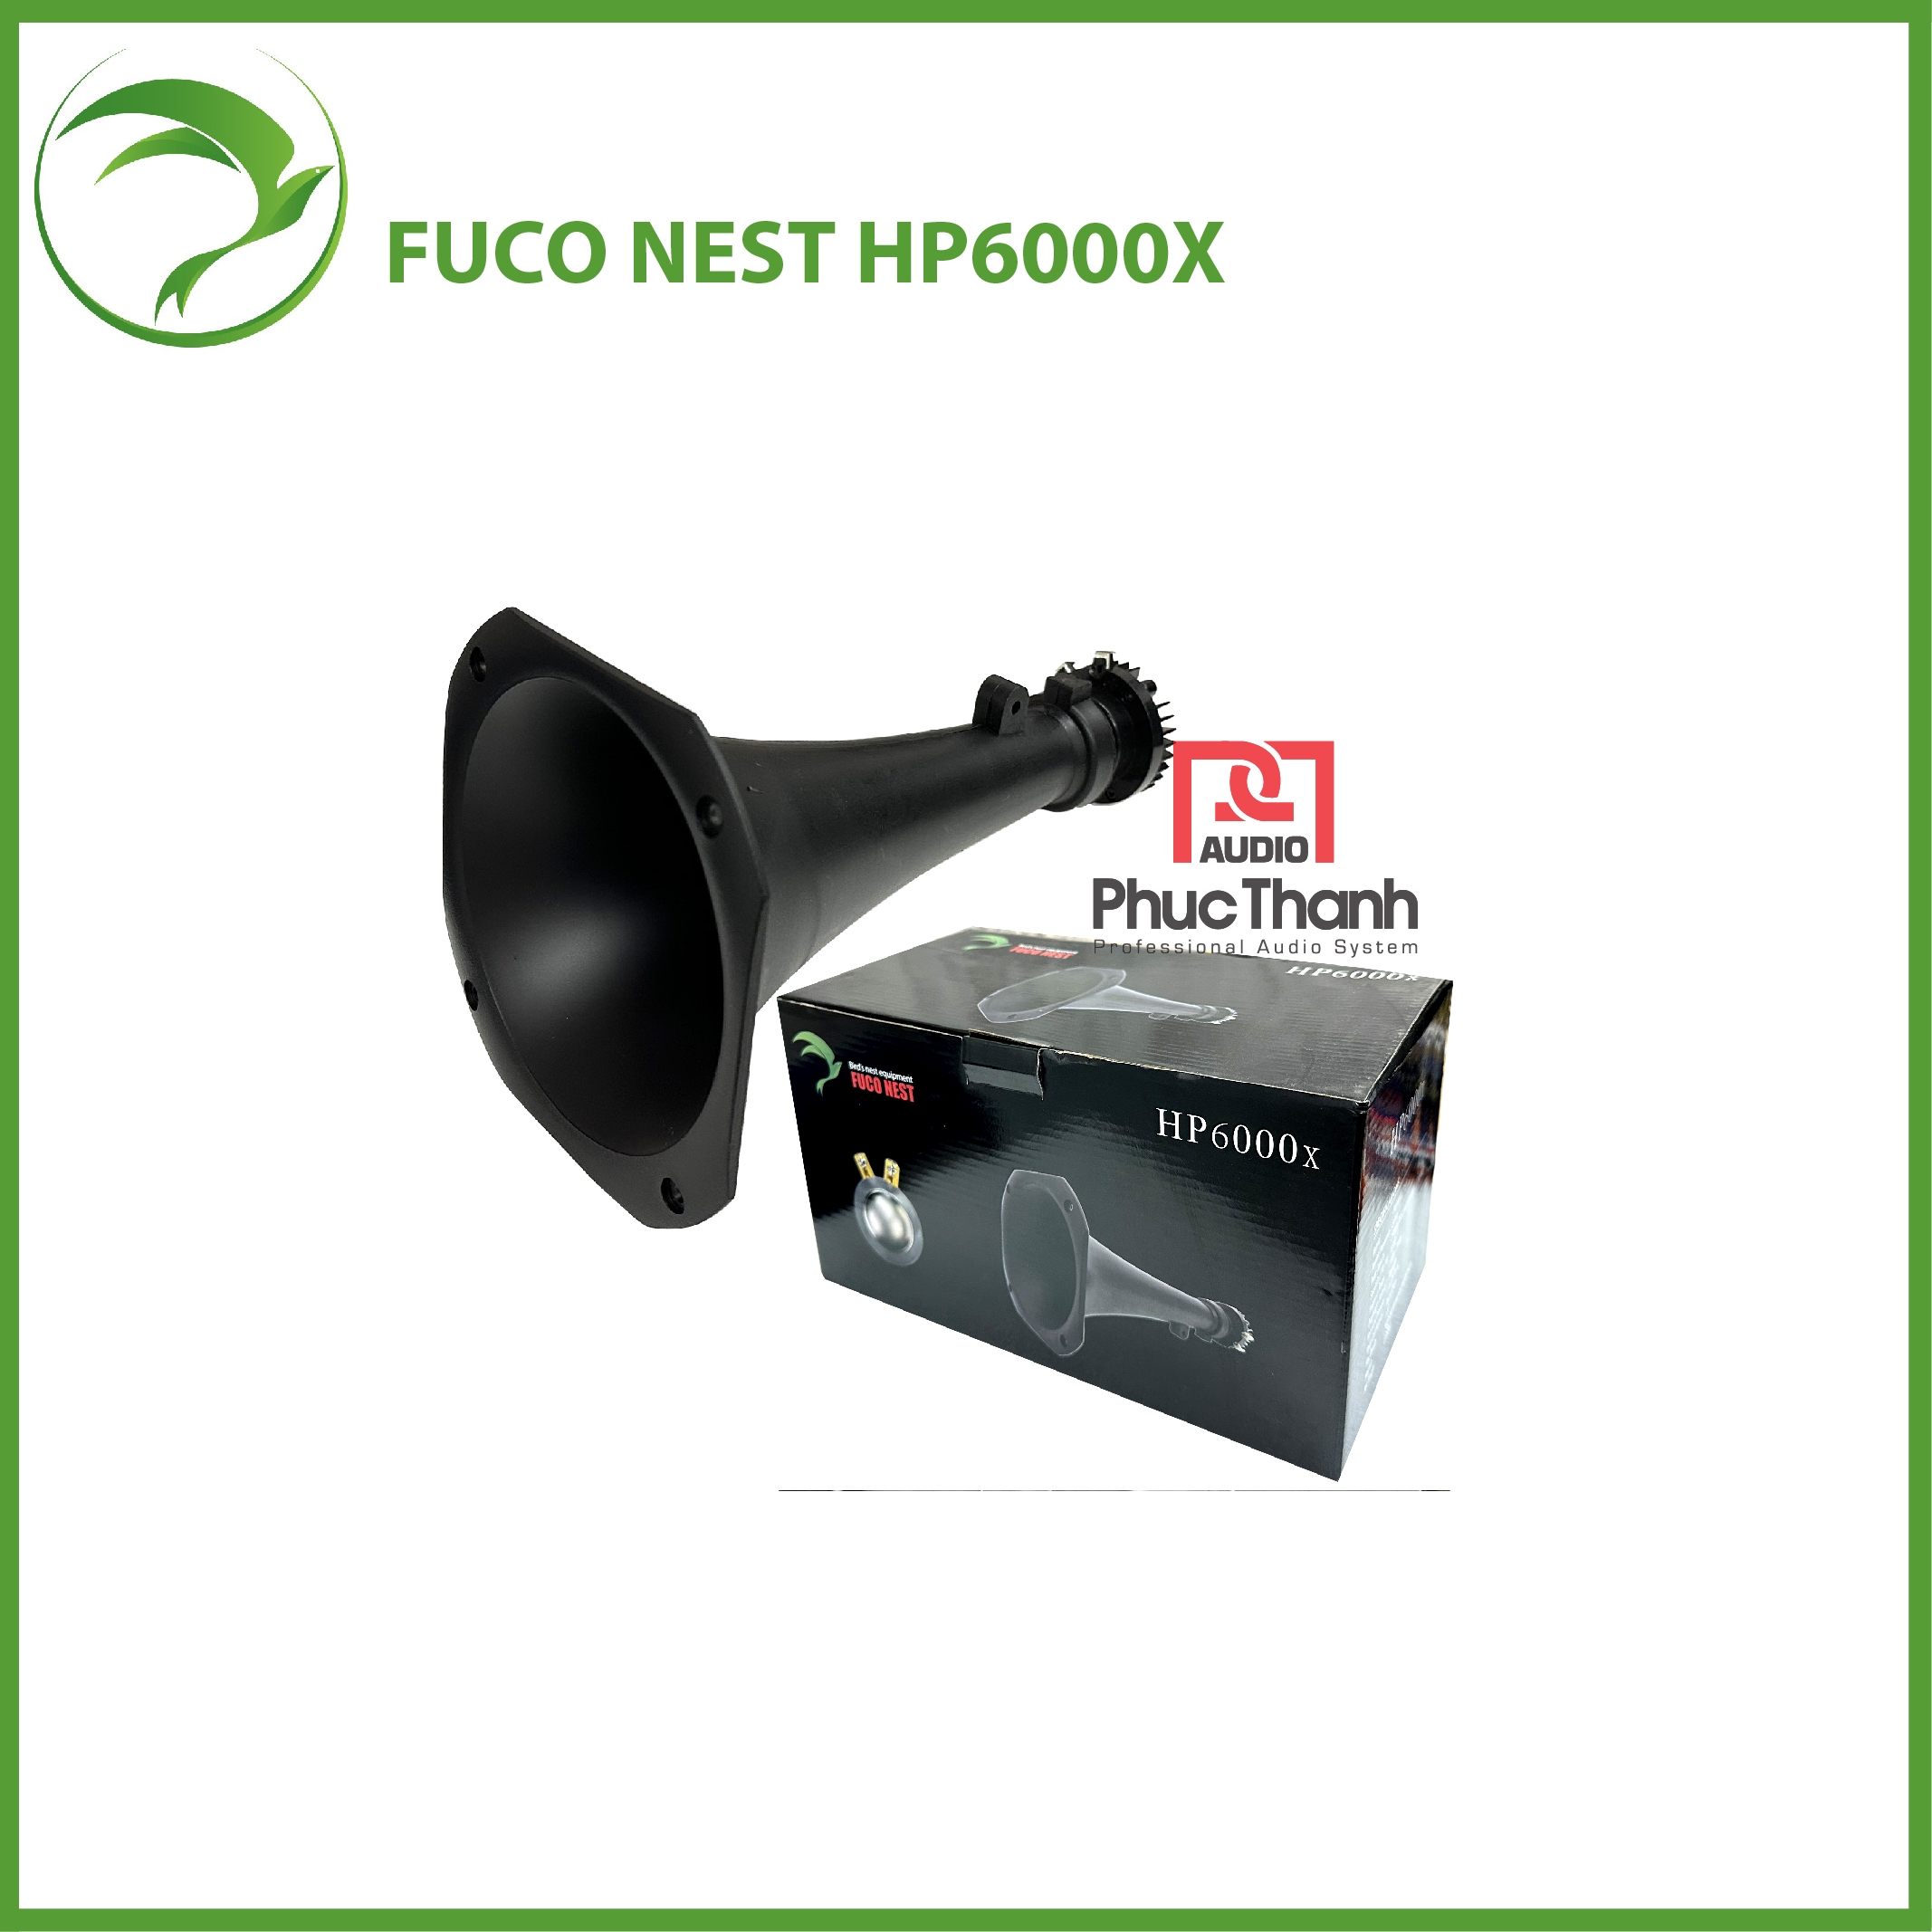 Loa Fuco Nest HP6000X